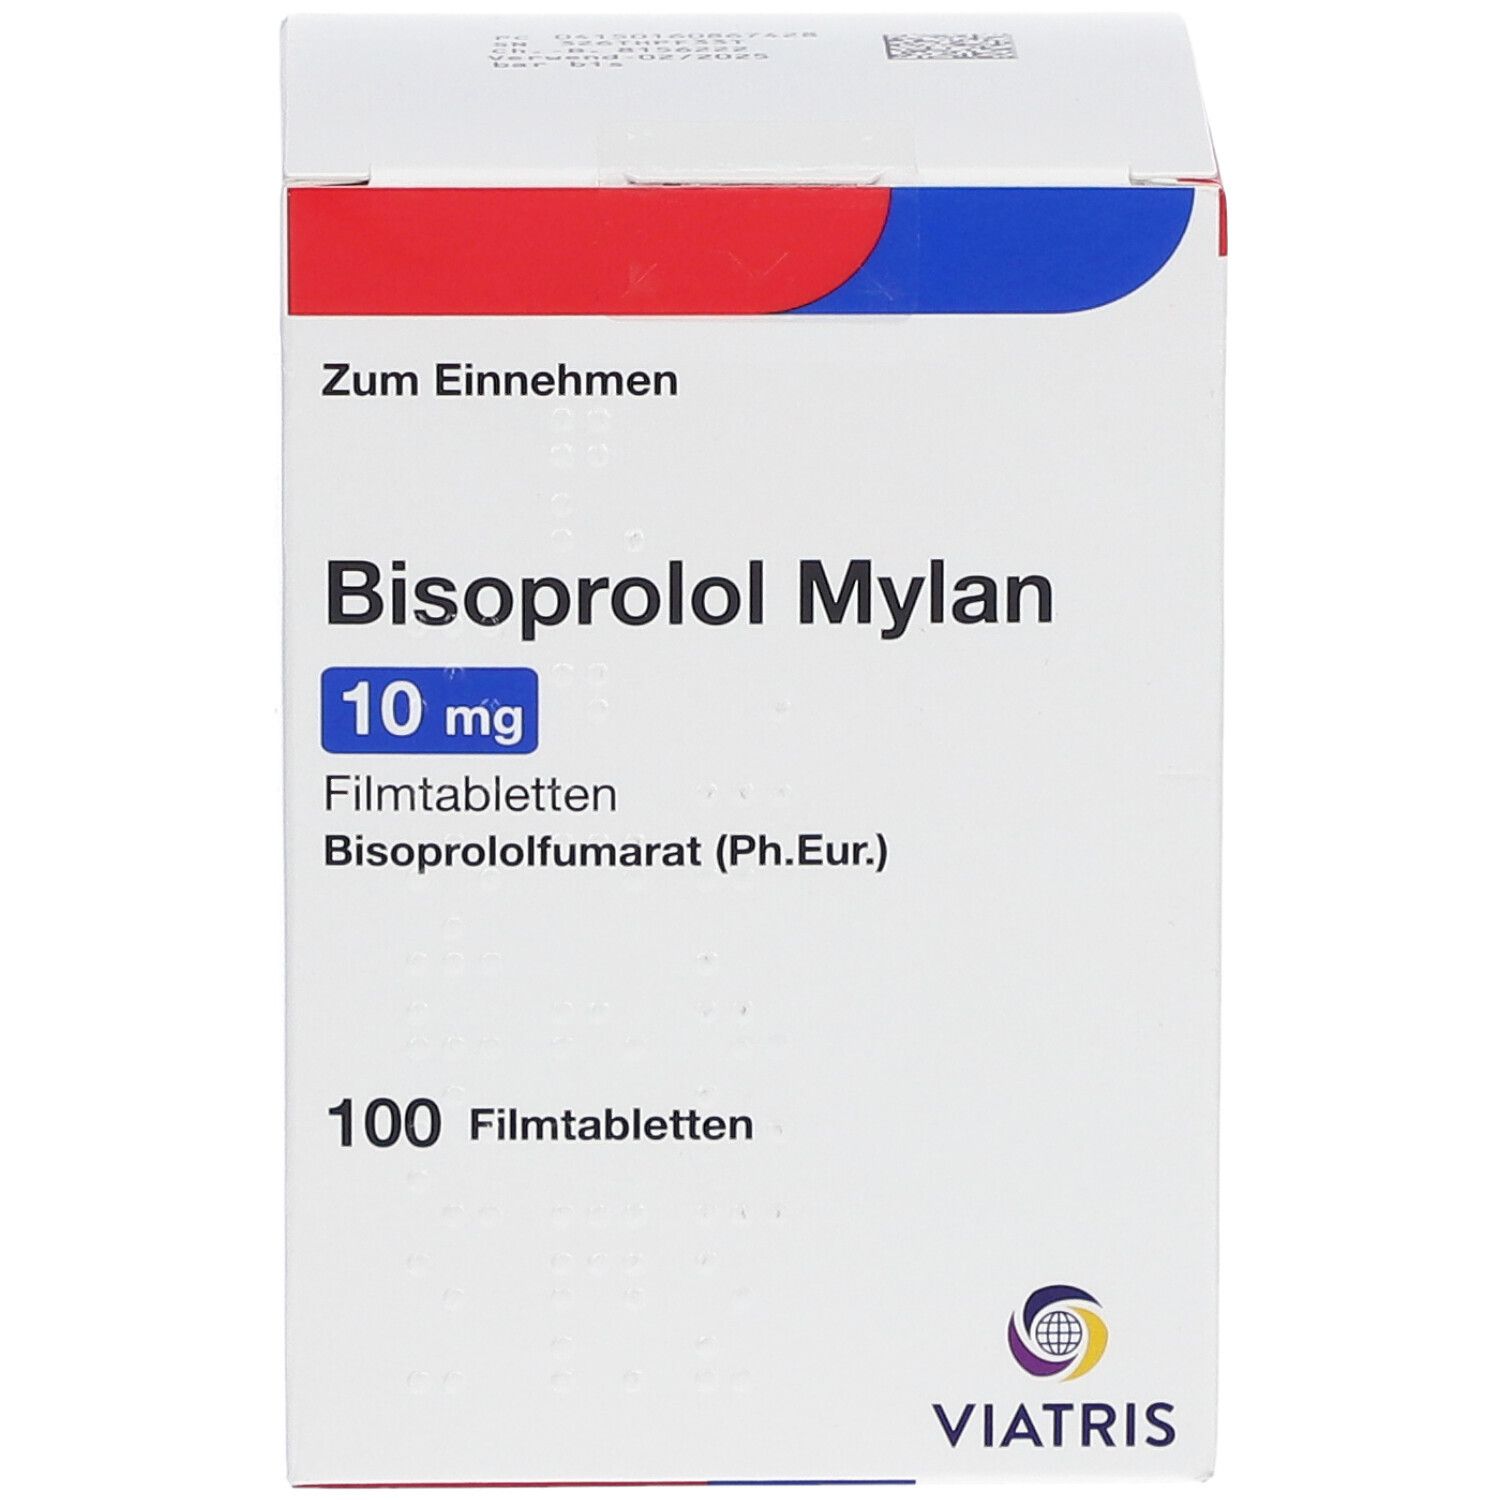 BISOPROLOL Mylan 10 mg Filmtabletten